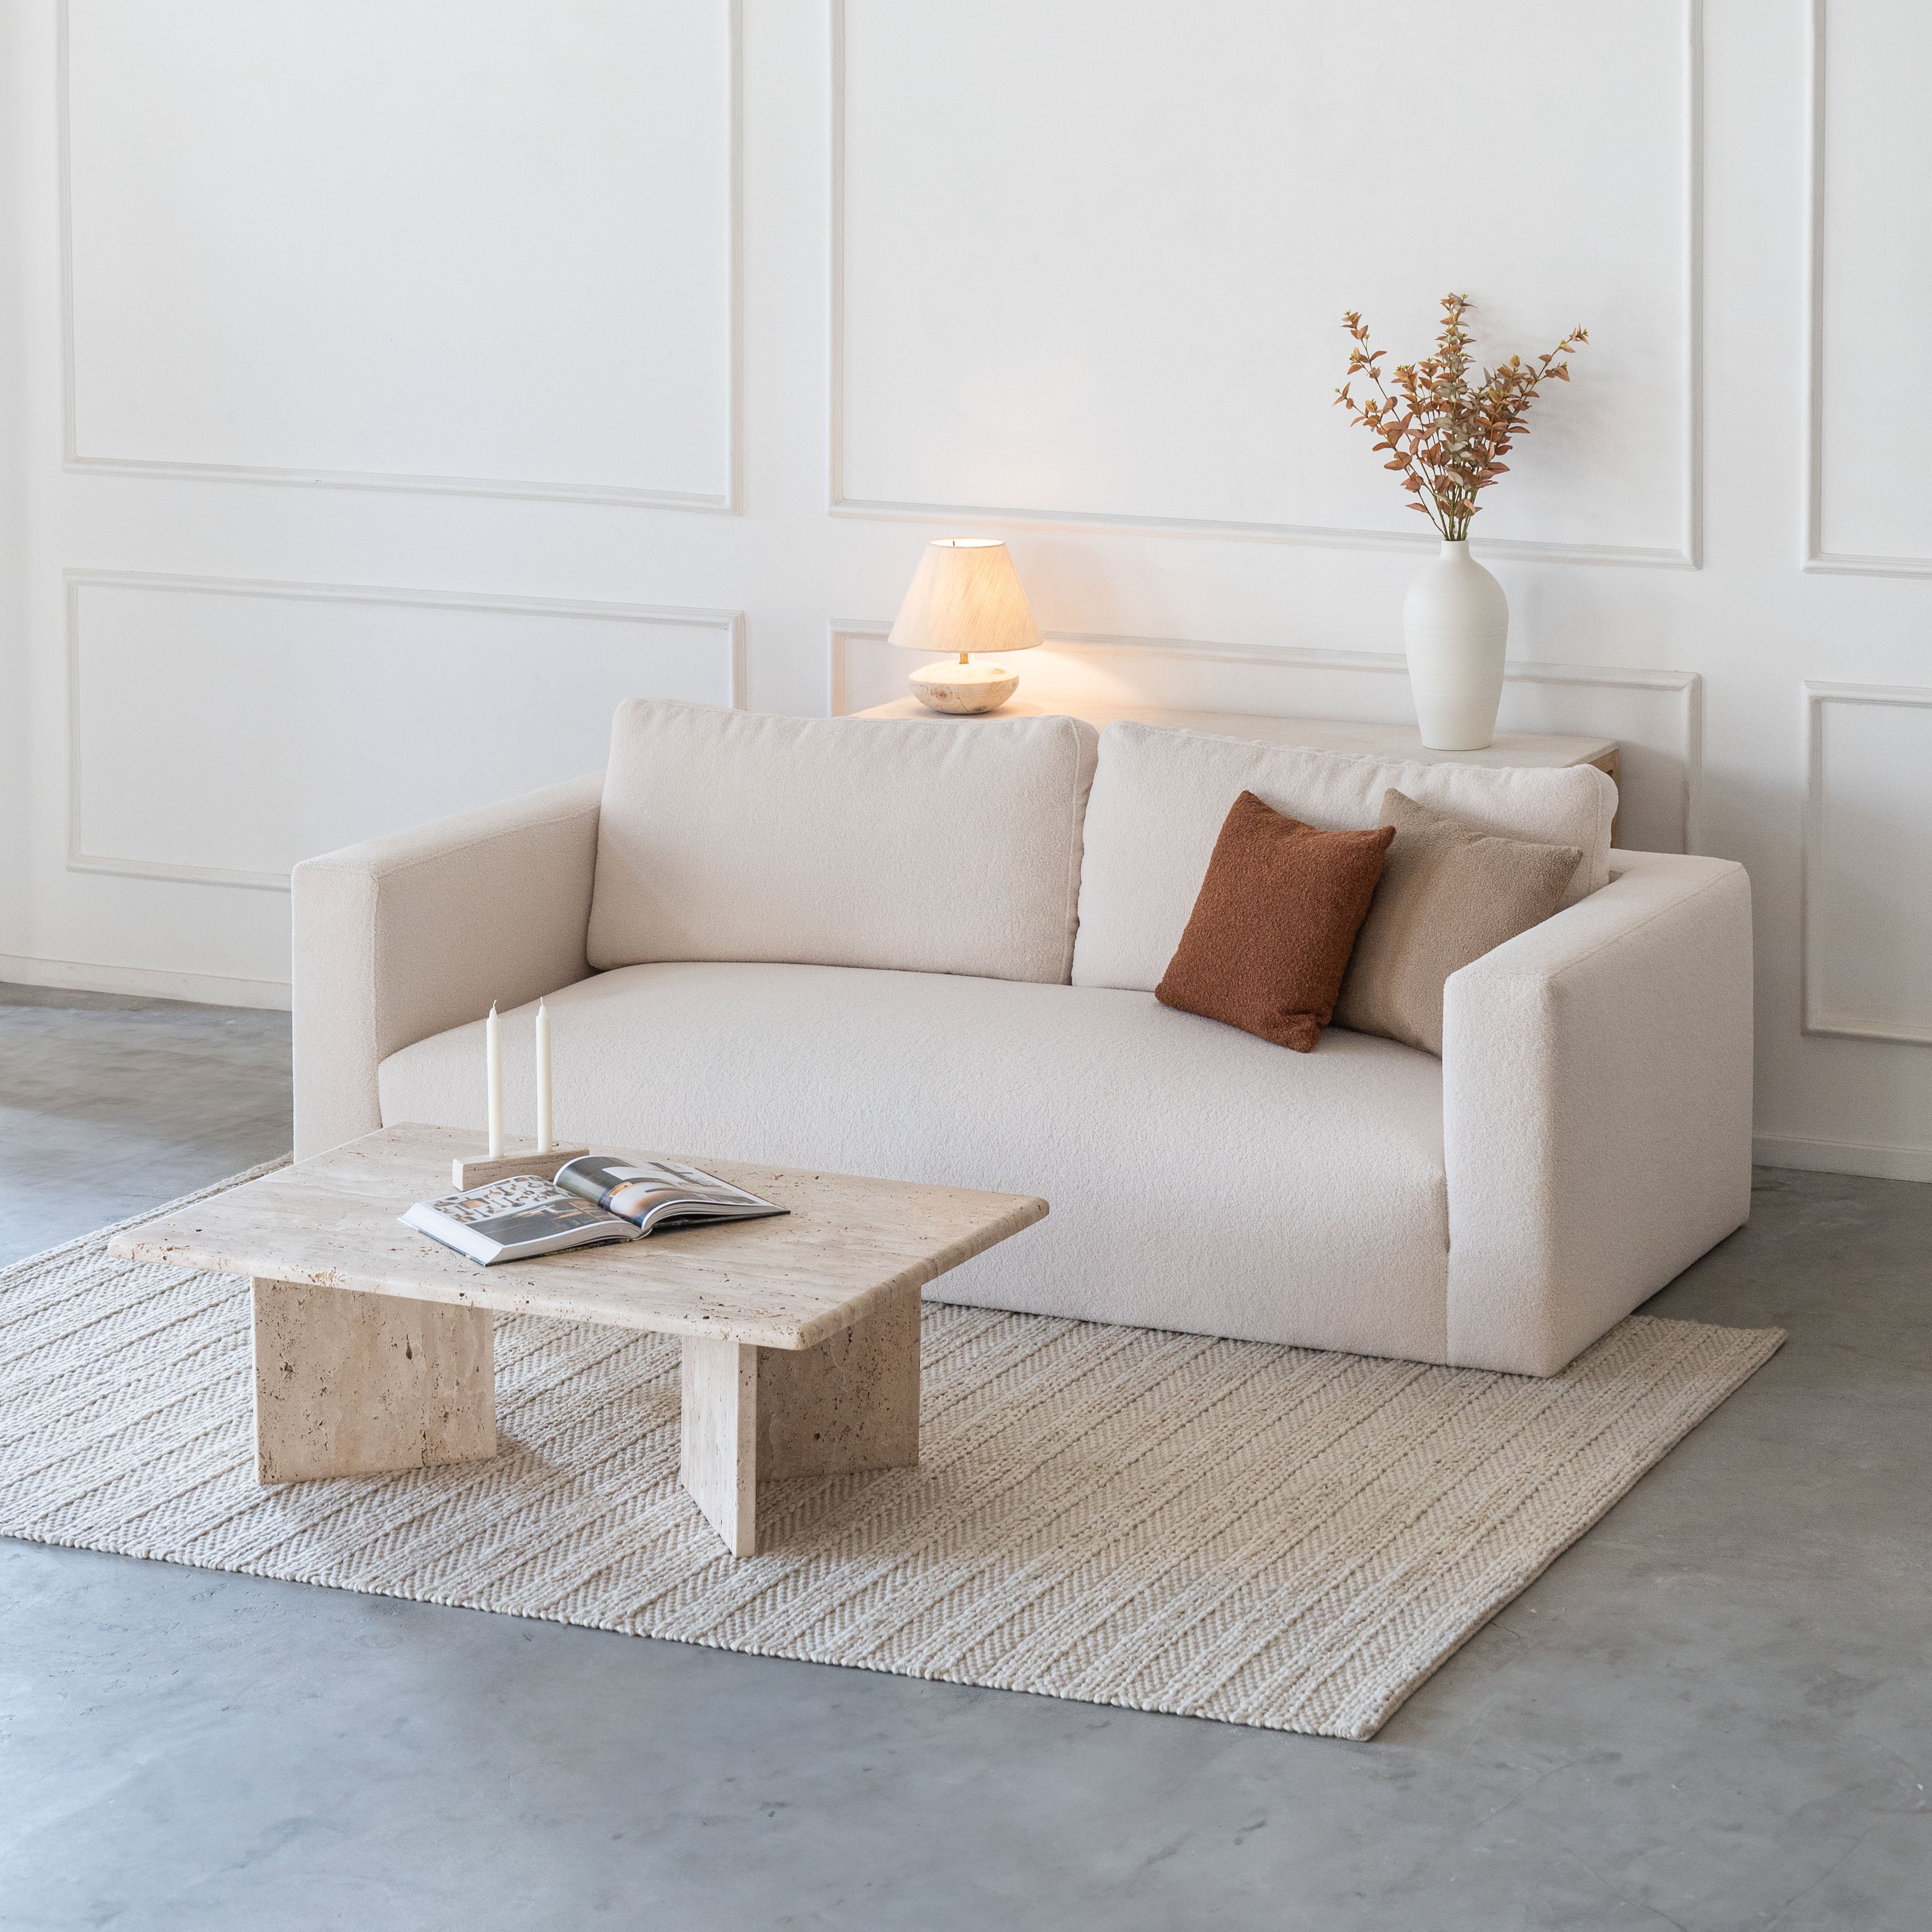 Eve Sofa-3 Seater  - WS Living - UAE - Sofa Wood and steel Furnitures - Dubai